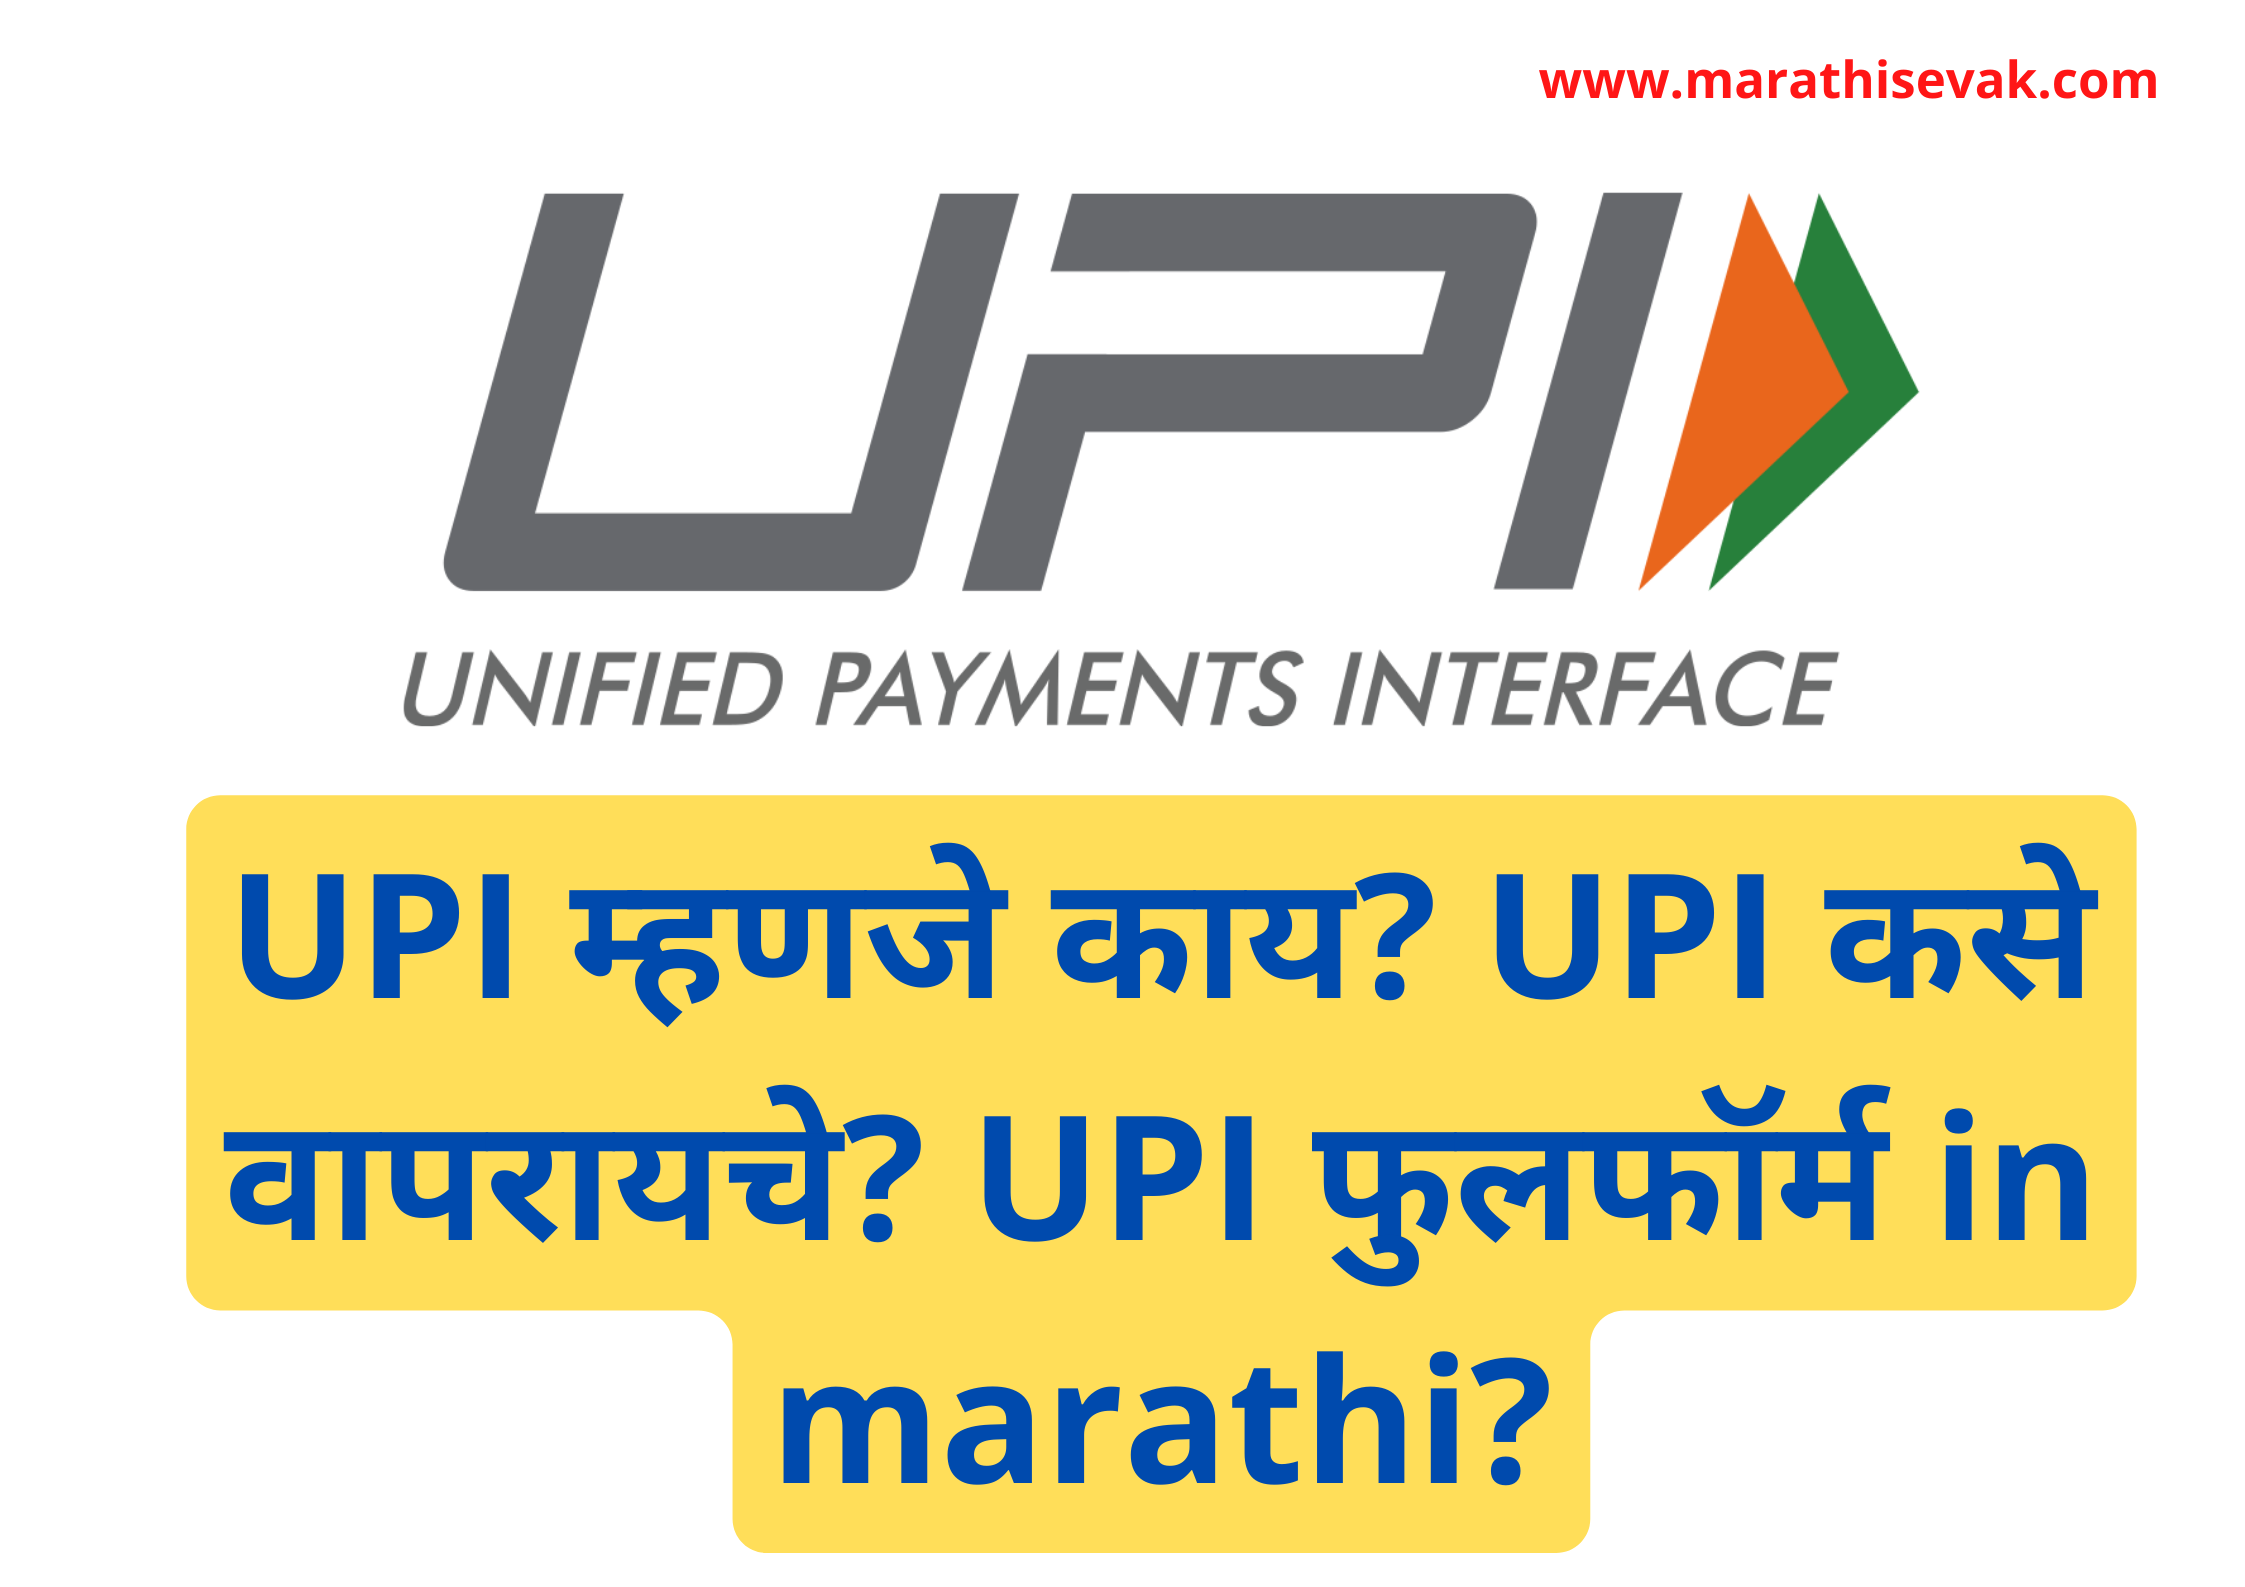 What is UPI in marathi?